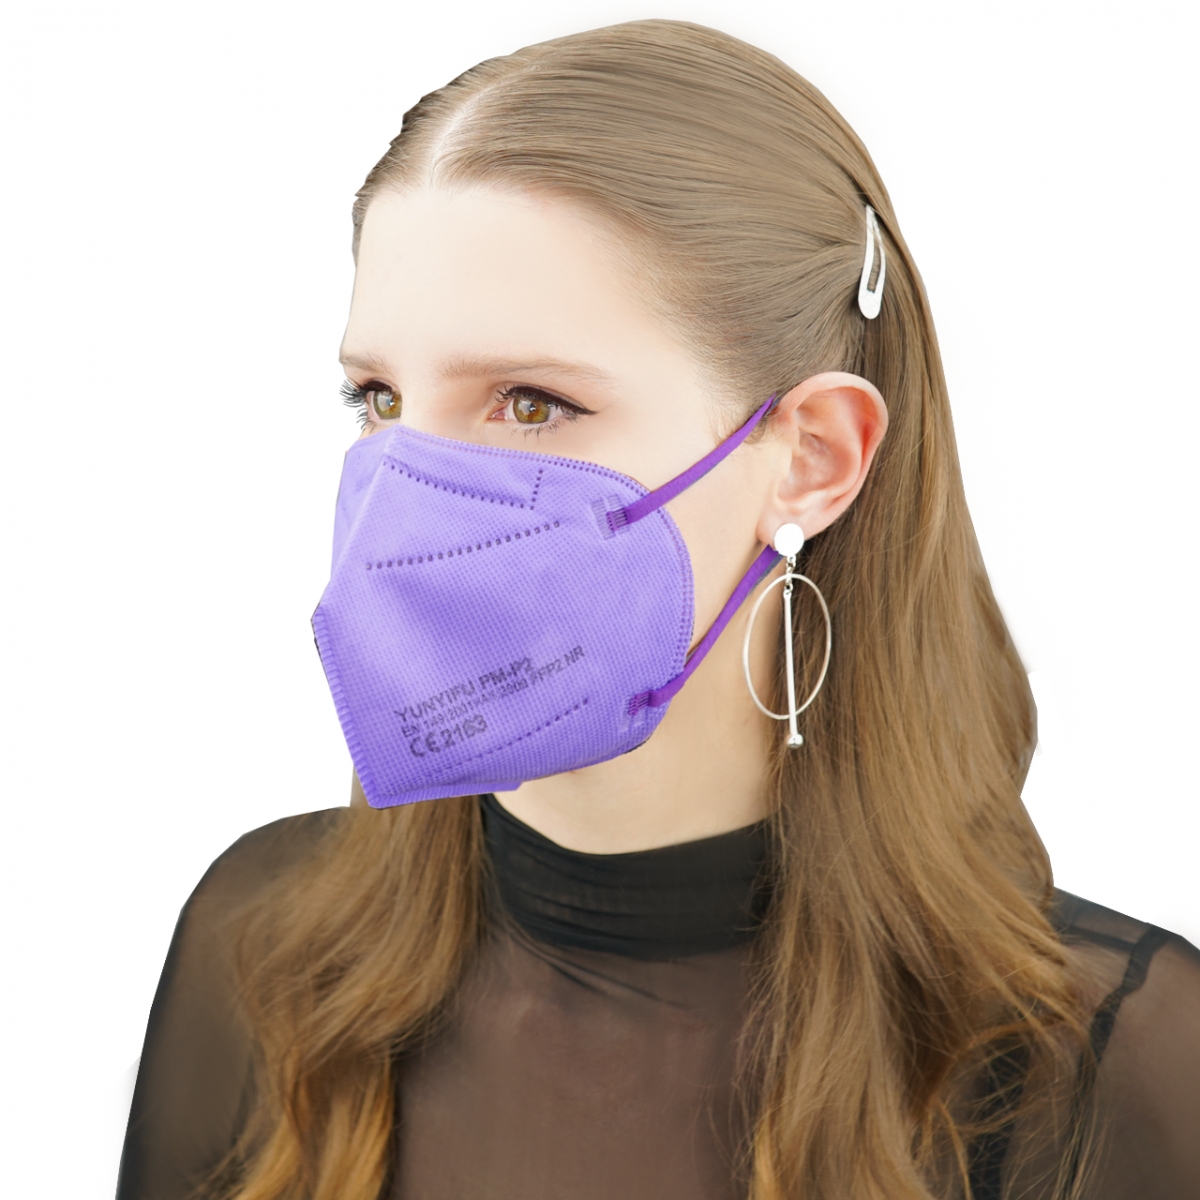 PSA-FFP2-Maske, Einwegmaske, Atemschutz, Mundschutz, lila, VE = 10 Stck